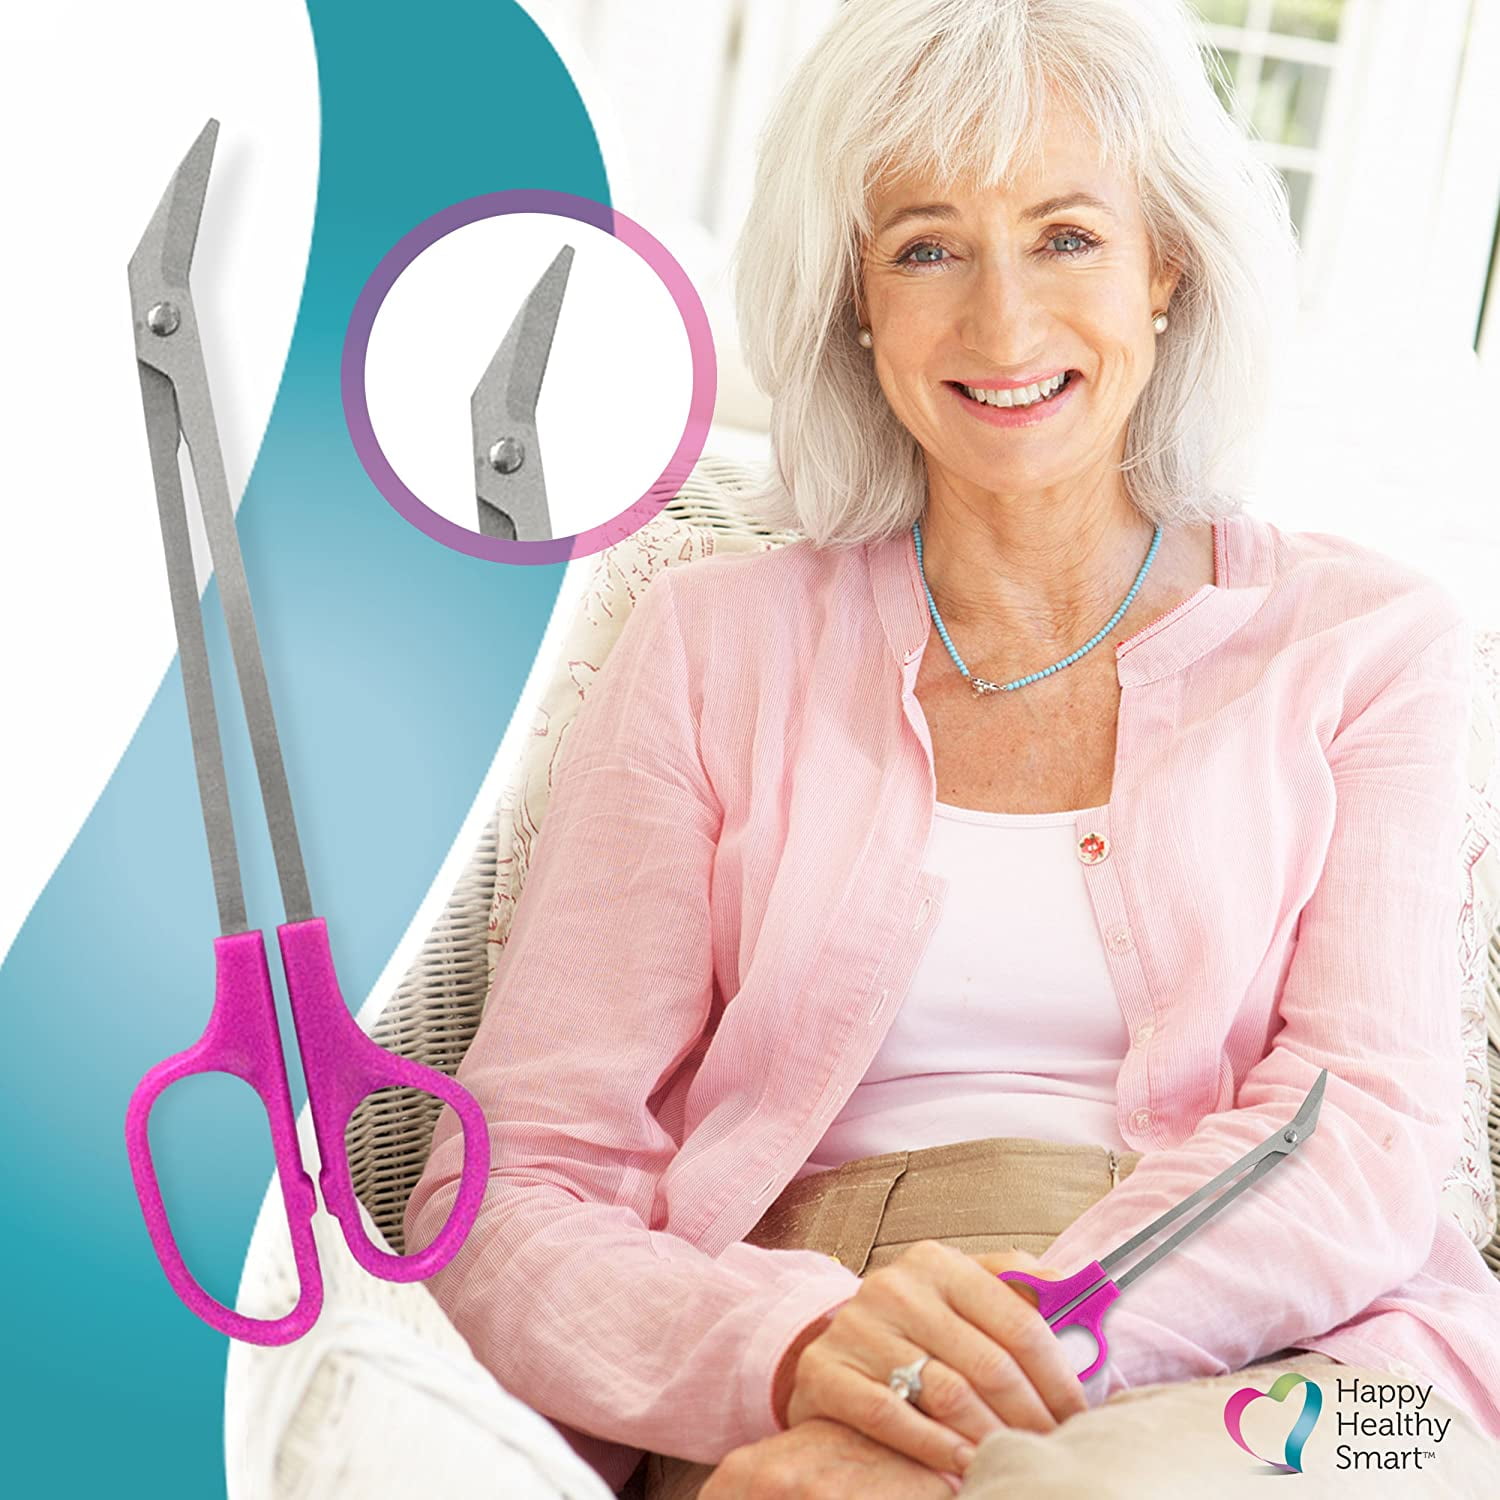 Body Toolz EZ Reach Long Handle Toenail Scissor for Seniors, Elderly with  Limite